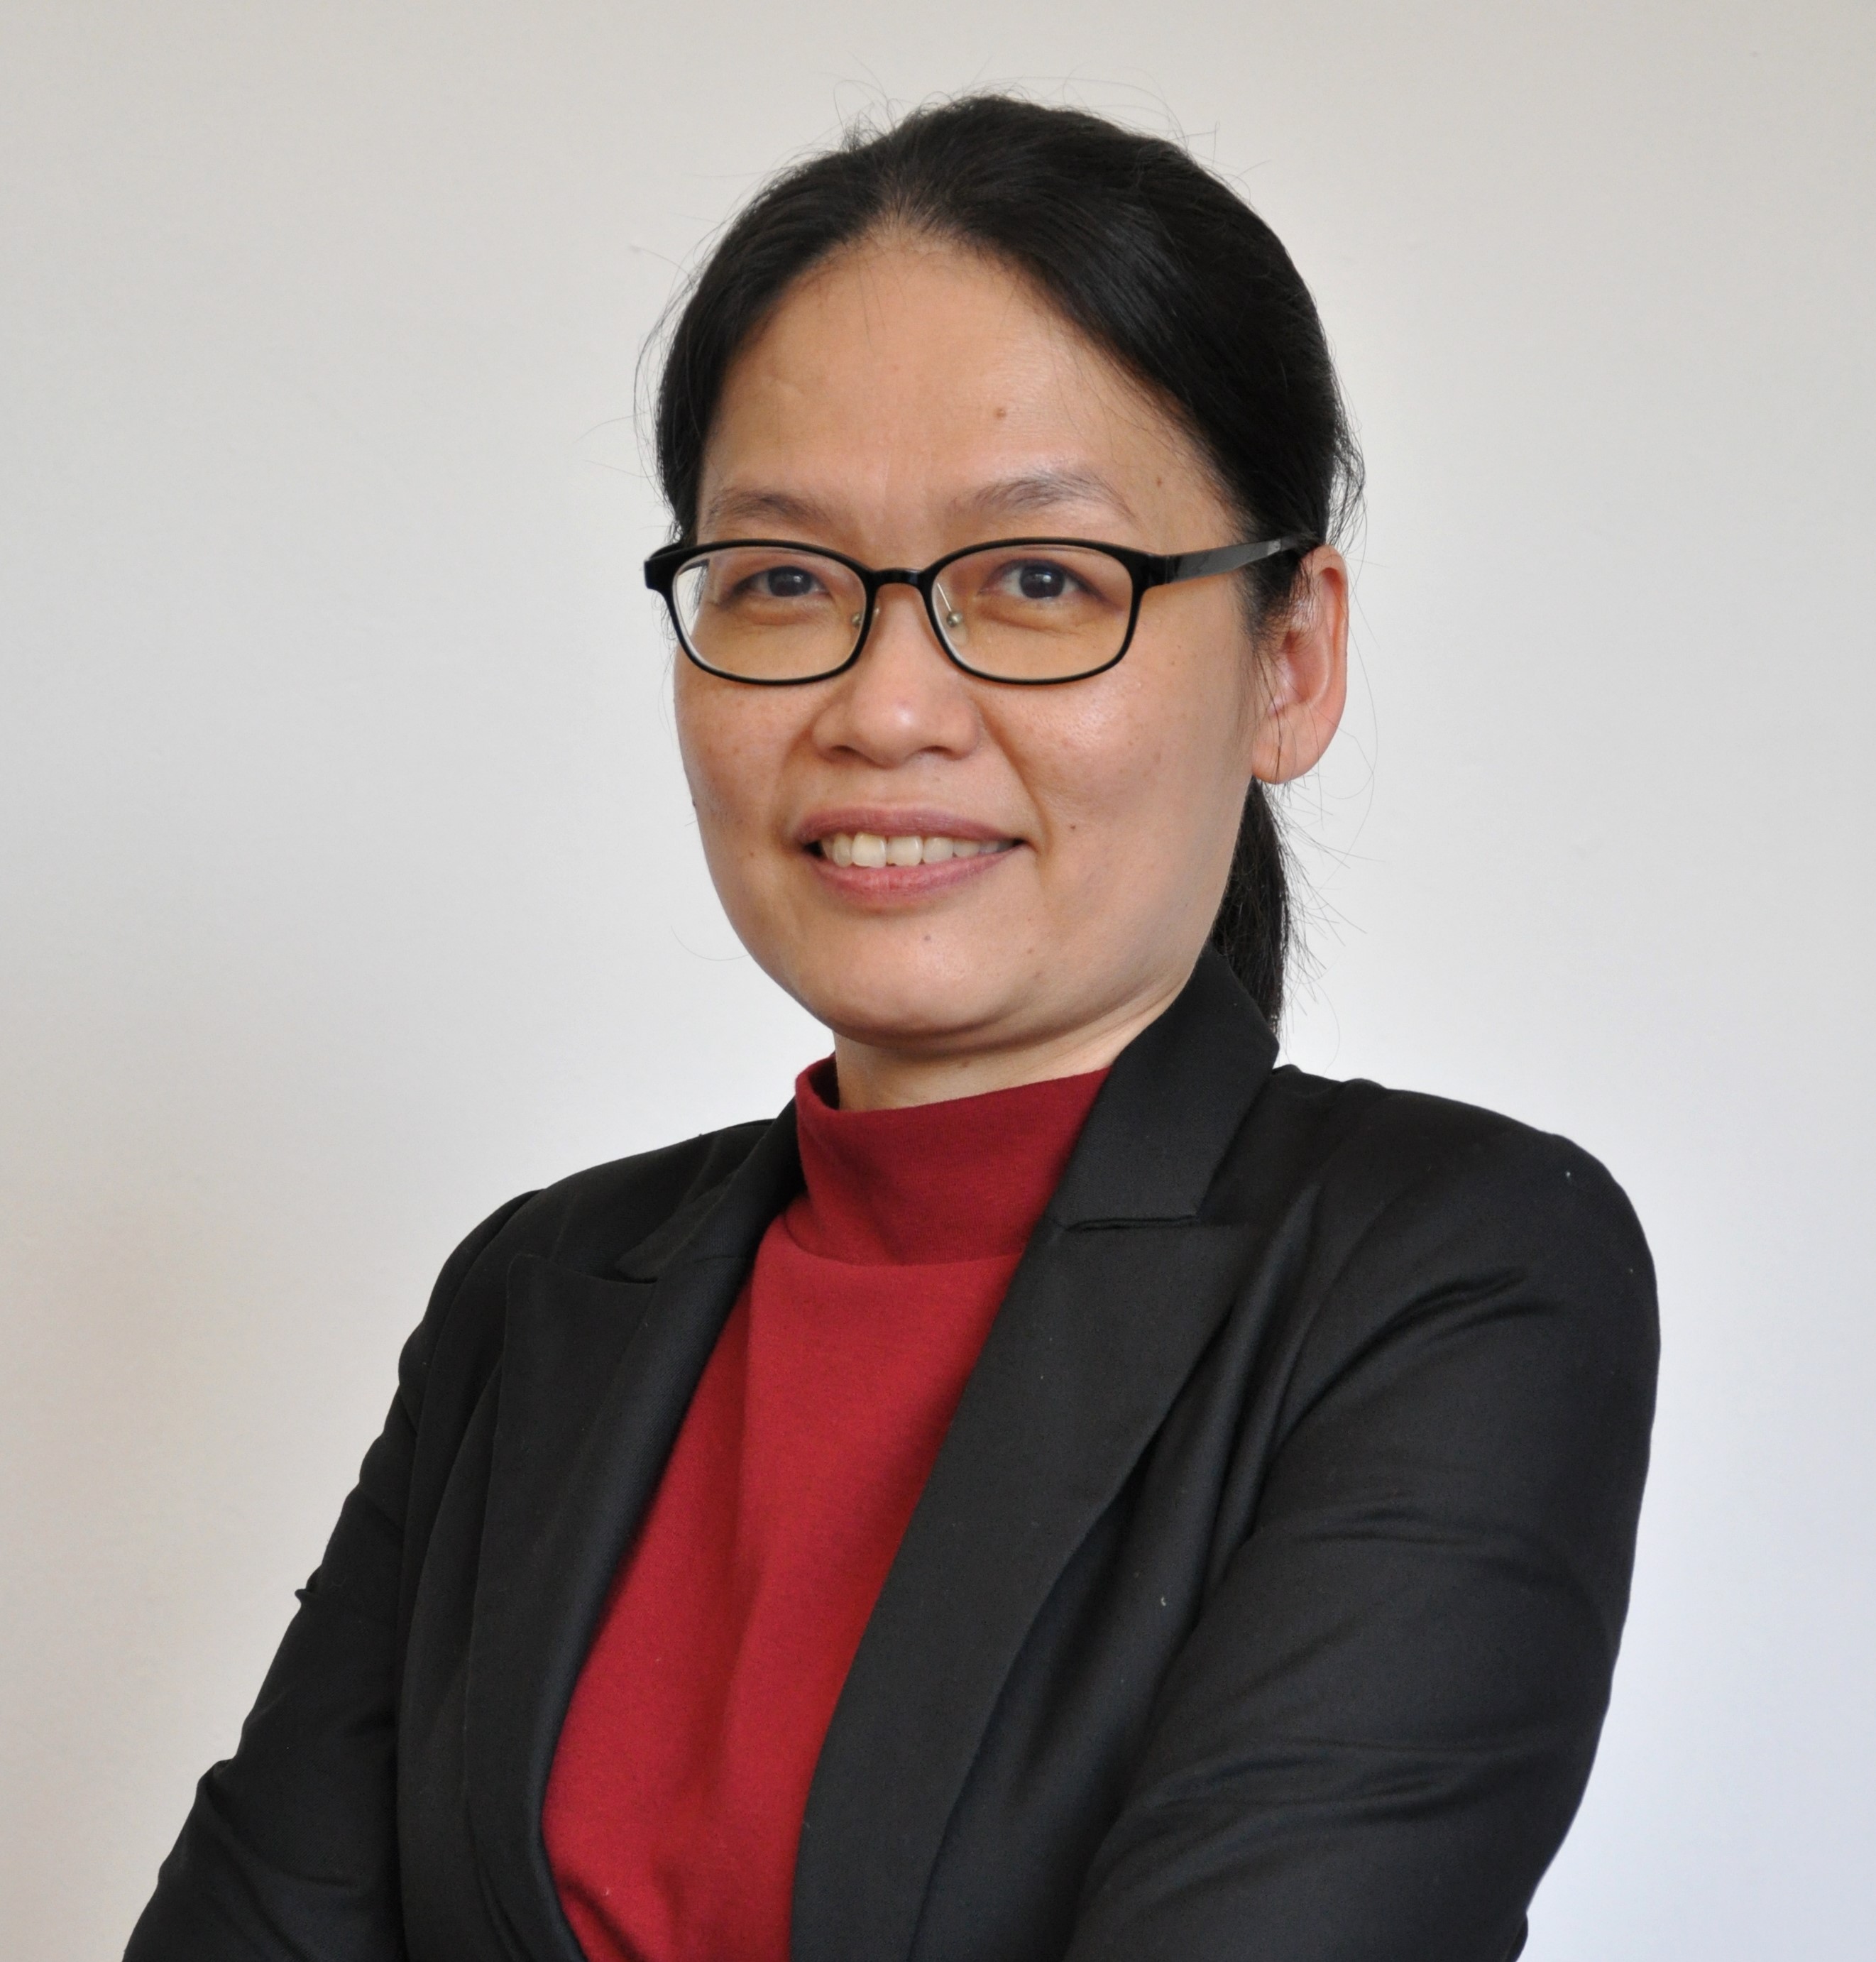 Dr. Cheng Lai Hoong